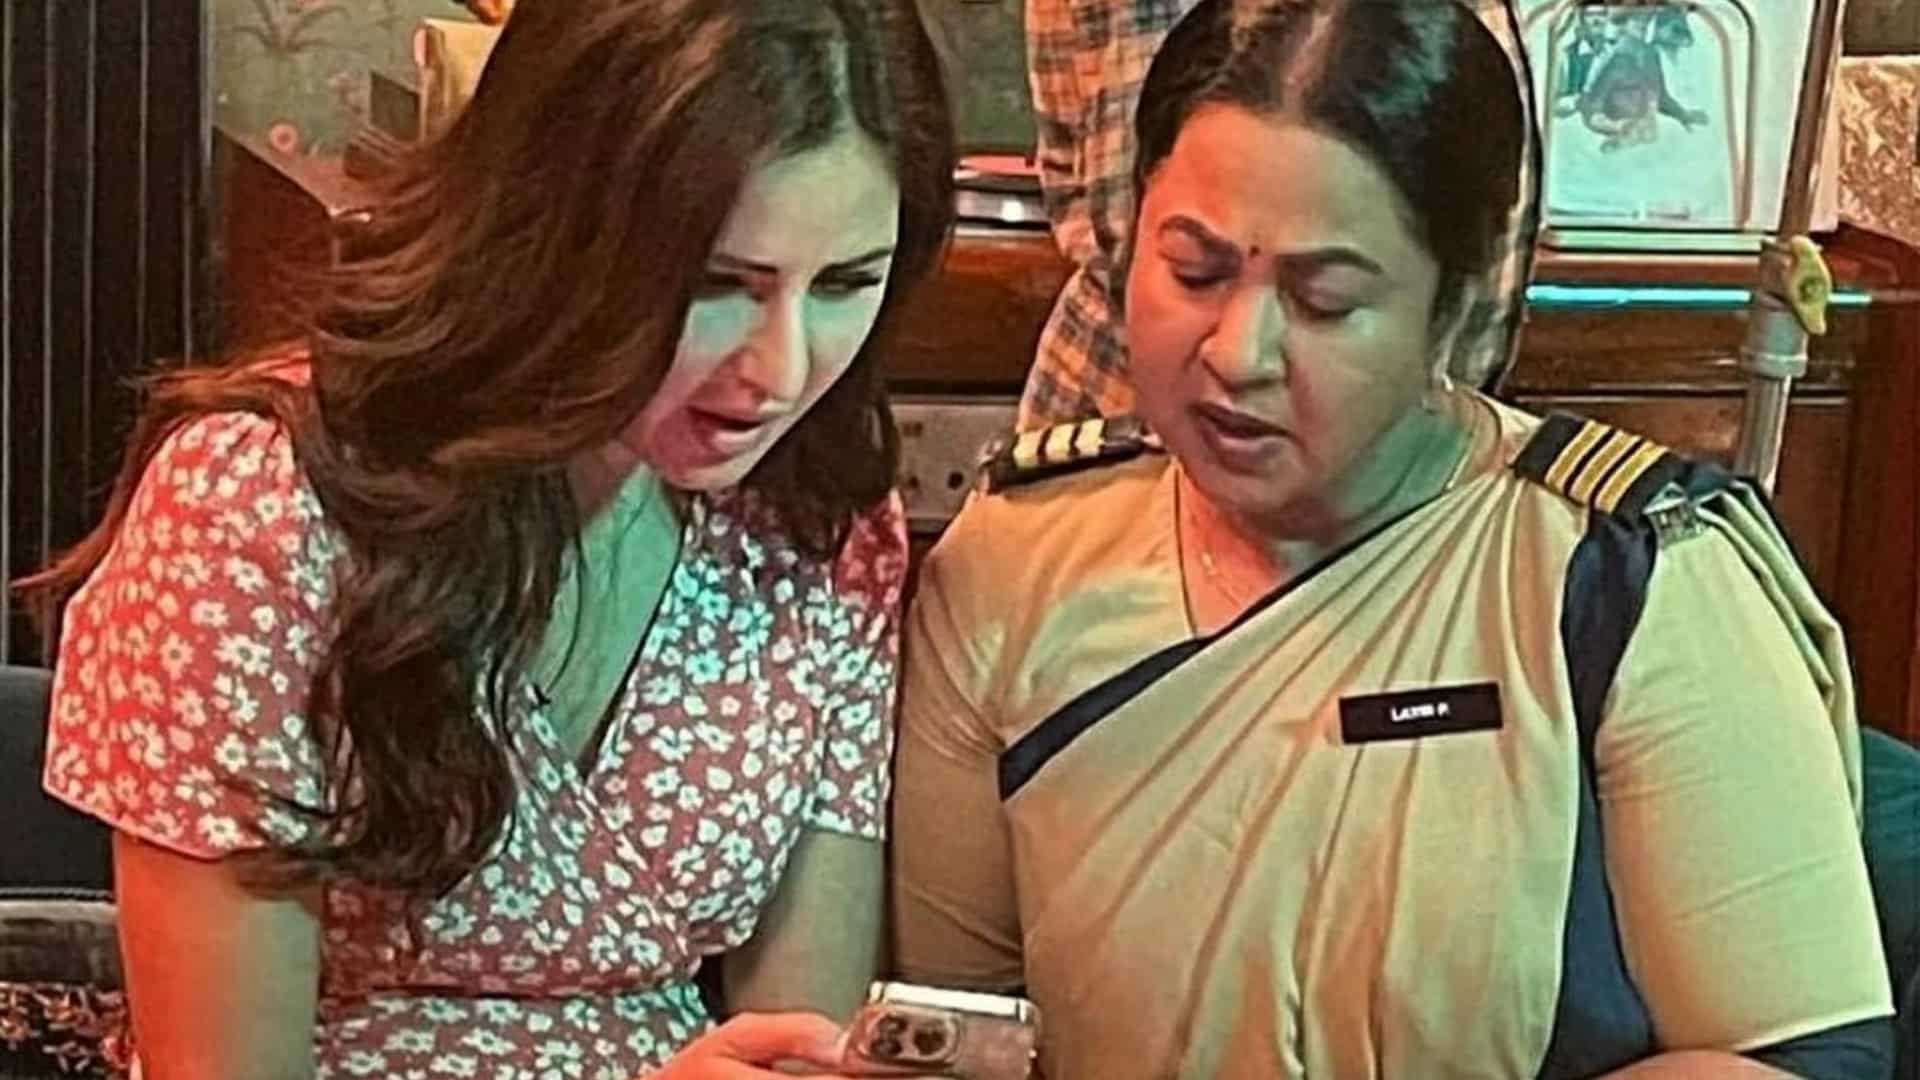 What are Katrina Kaif and Raadhika Sarathkumar looking at?